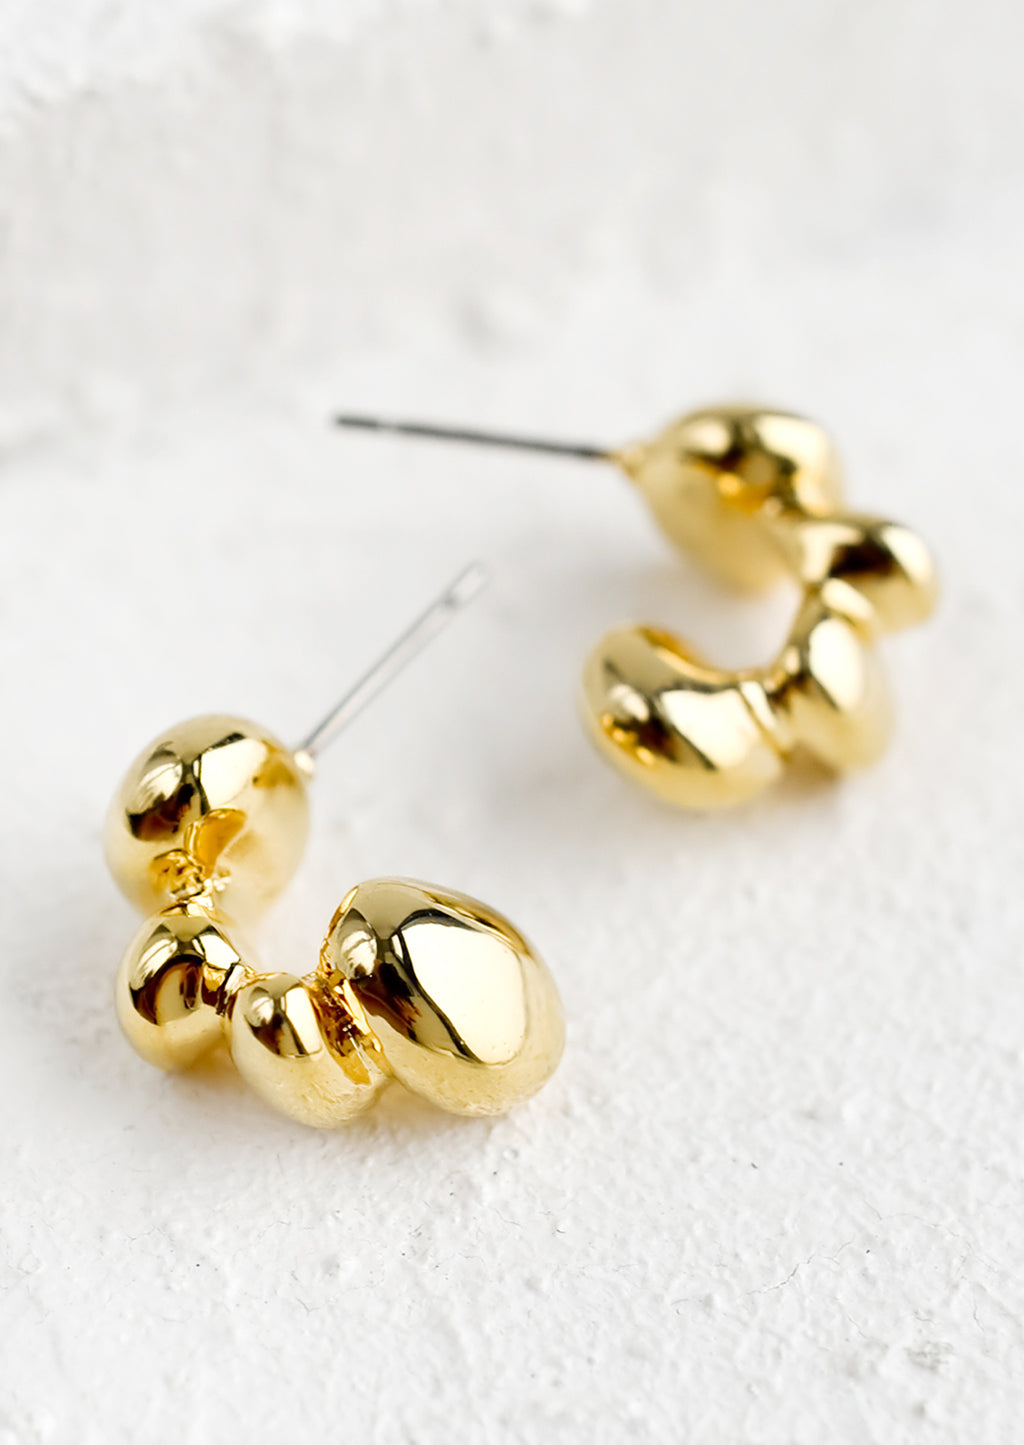 2: A pair of gold hoop earrings in melty blob shape.